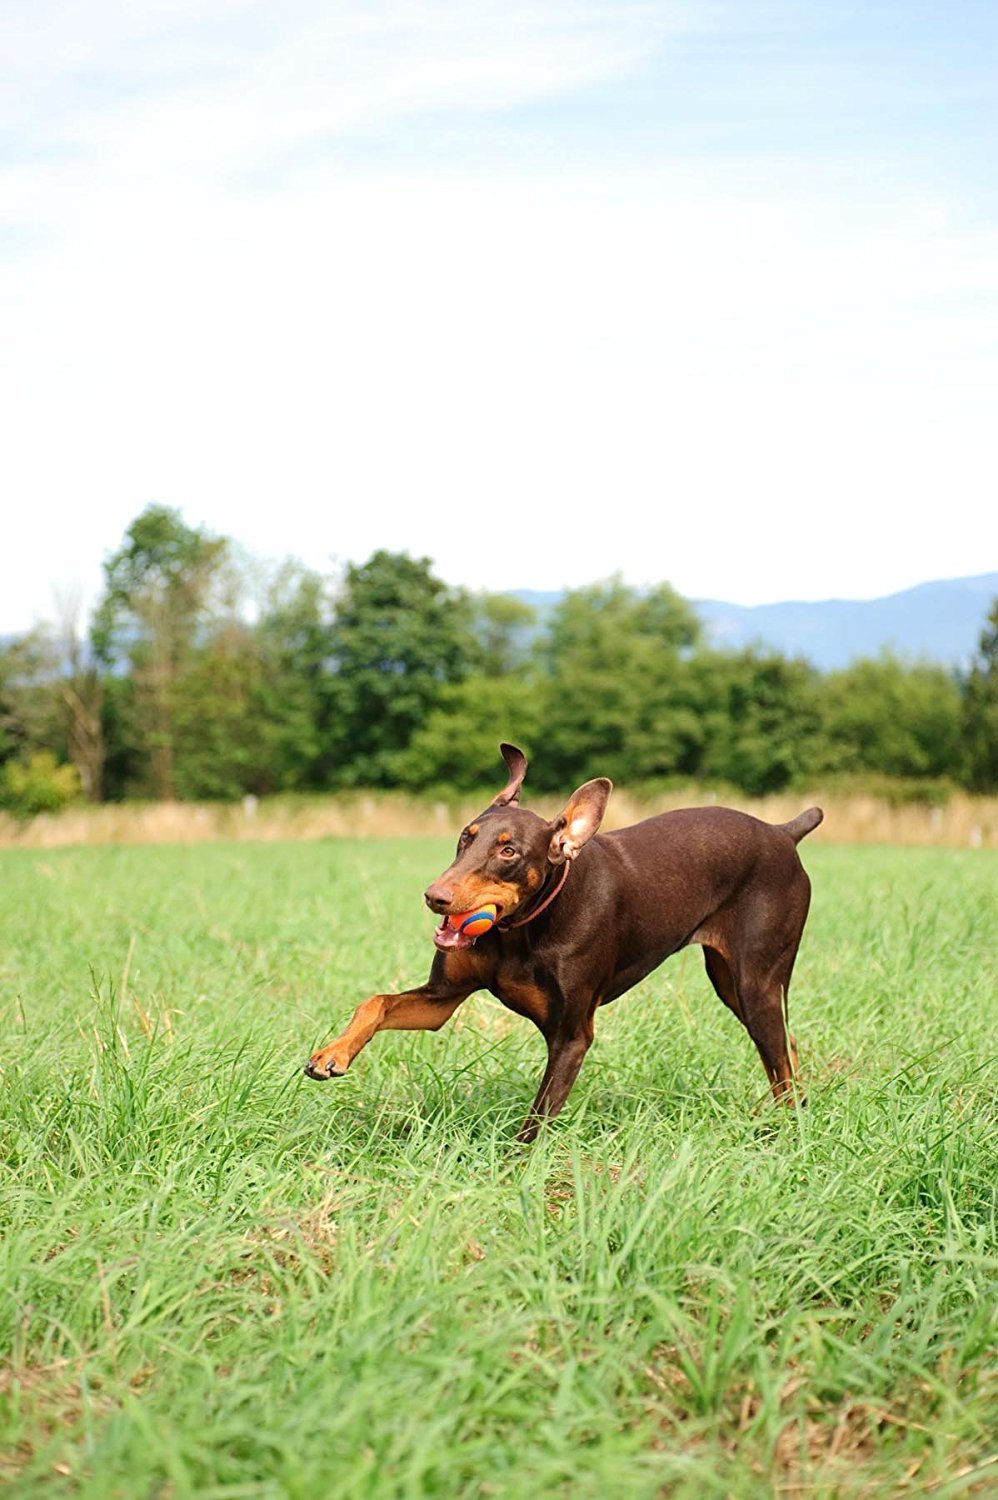 Canine Hardware Chuckit! Ultra Ball, Large, 3-Inch, 2-Pack, Petmate